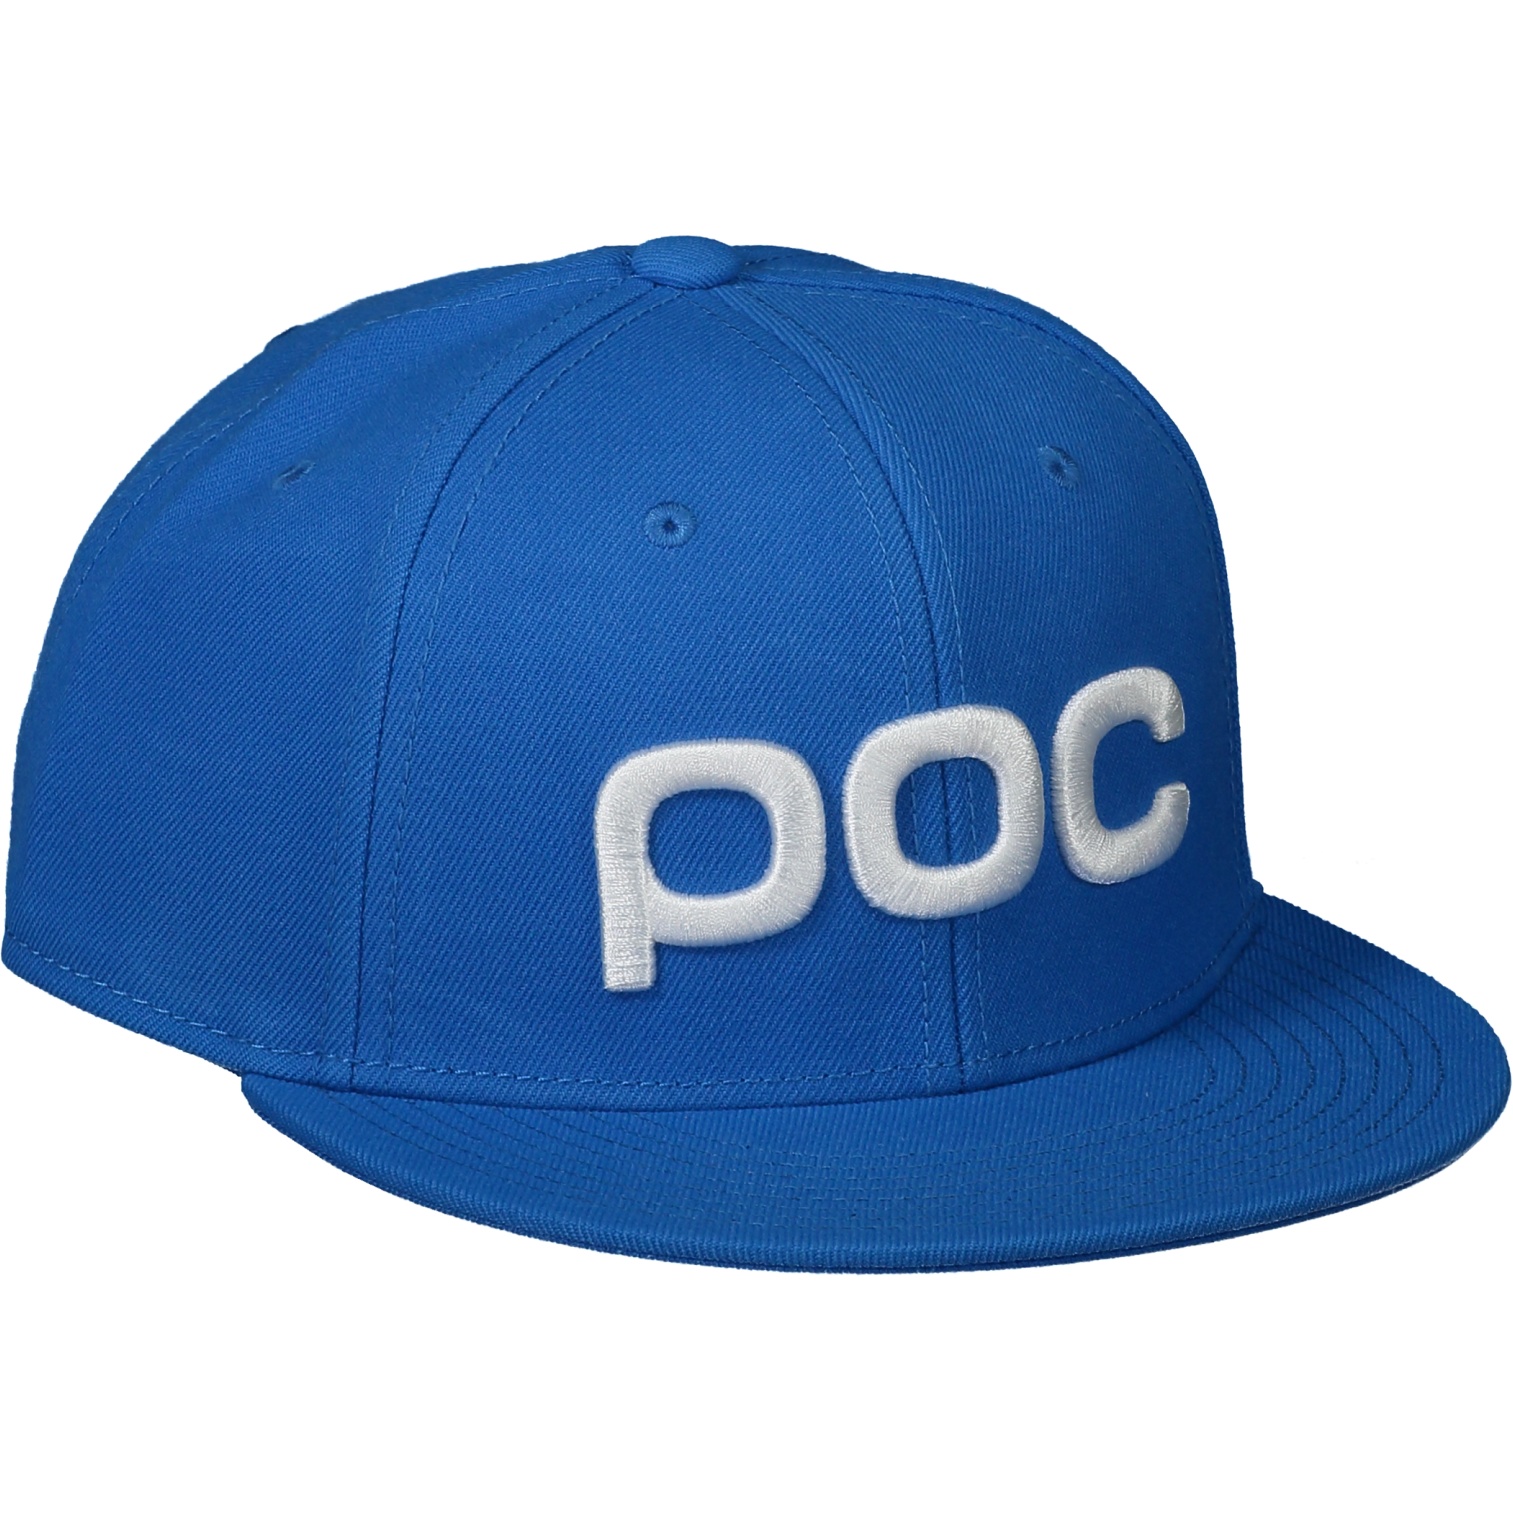 Produktbild von POC Corp Cap - 1651 Natrium Blue